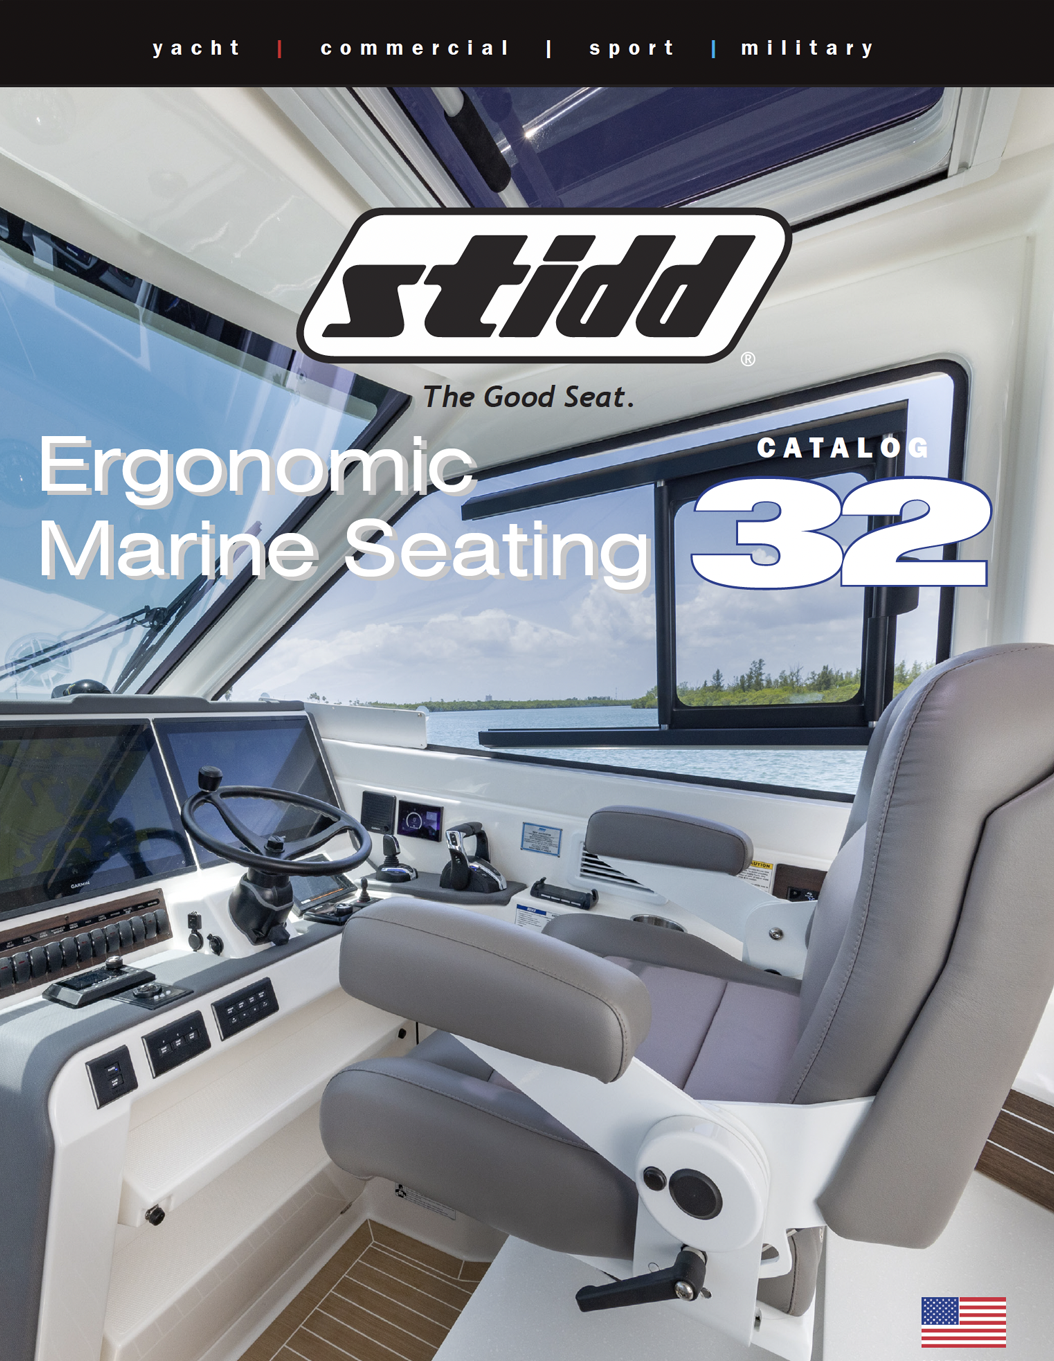 Ergonomic Marine Seating Catalog